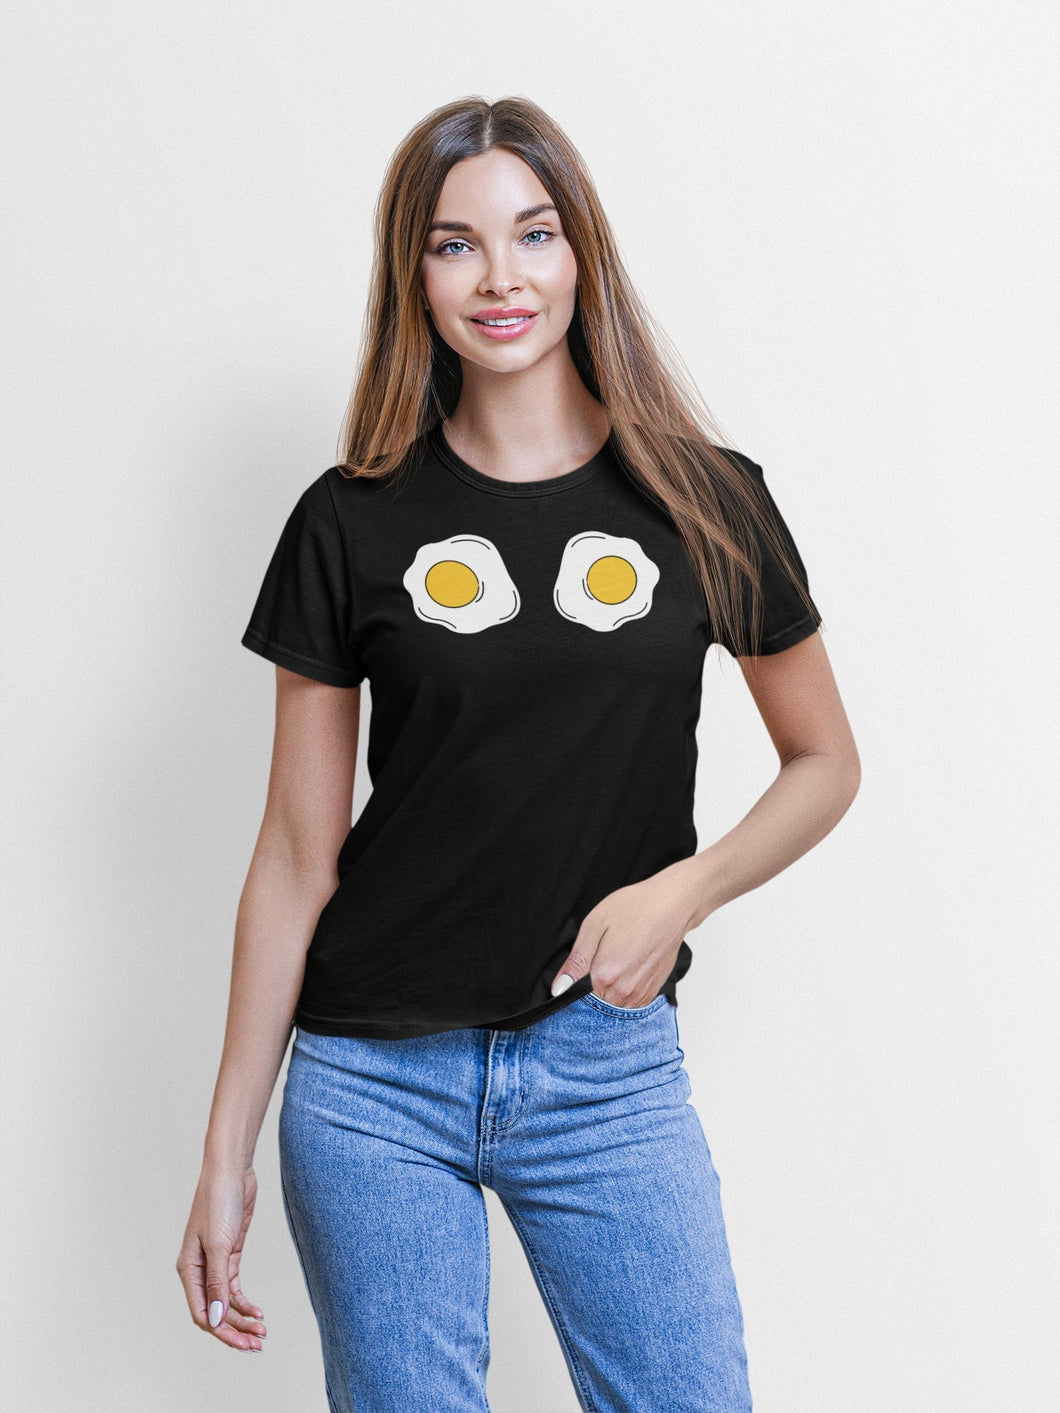 Egg Bra Shirt, Summer Season Shirt, Egg Summer Shirt, Fried Egg Shirt, No Bra Club Shirt